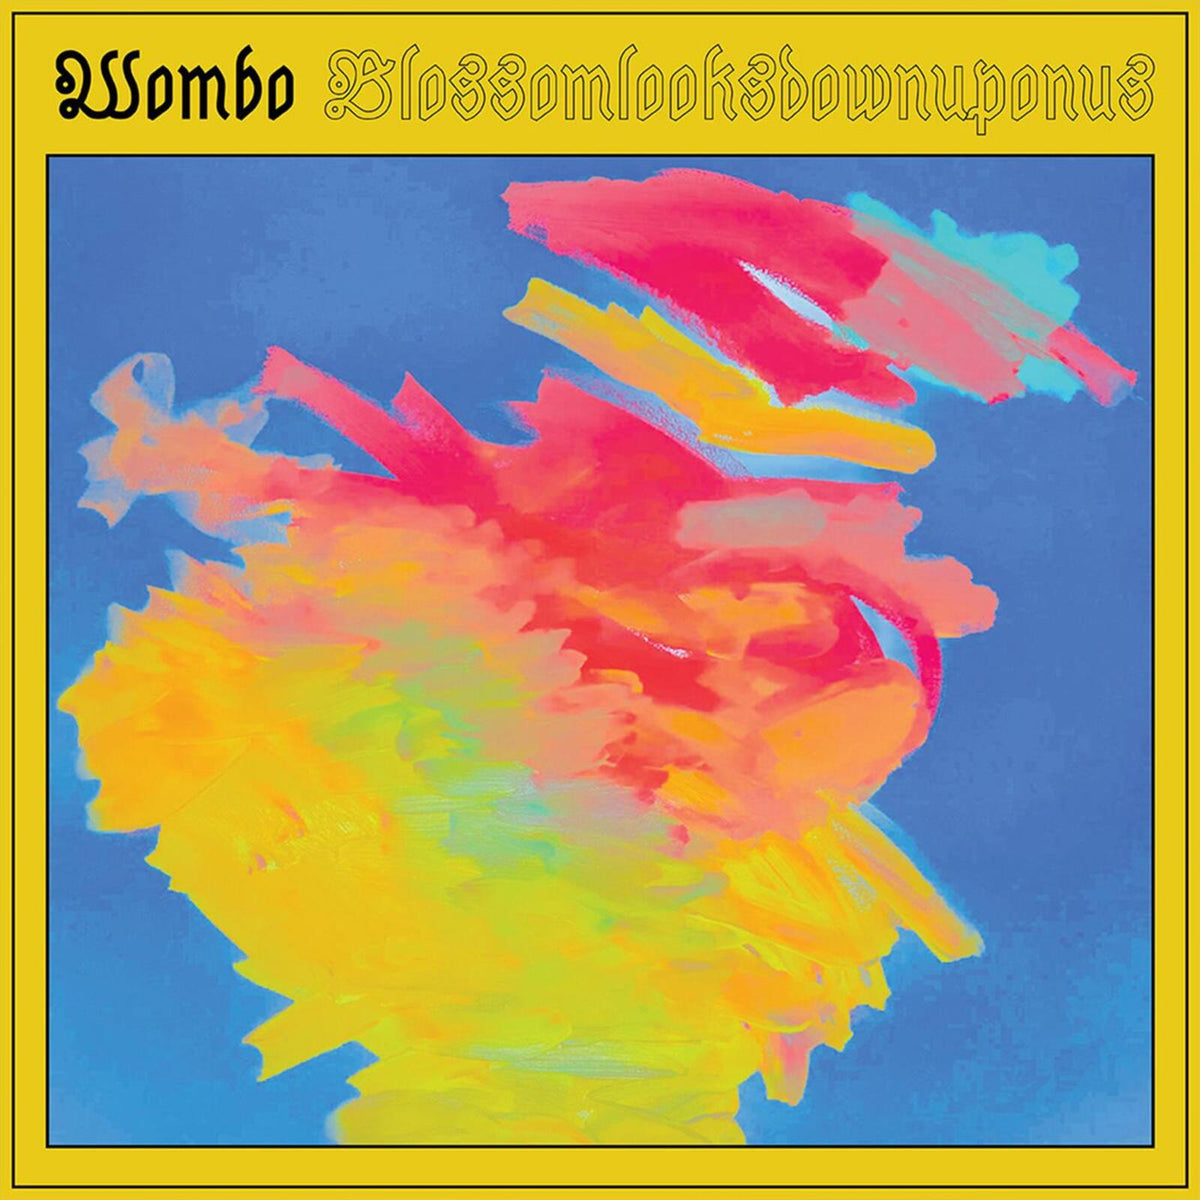 Wombo - Blossomlooksdownuponus - LPFTK186C